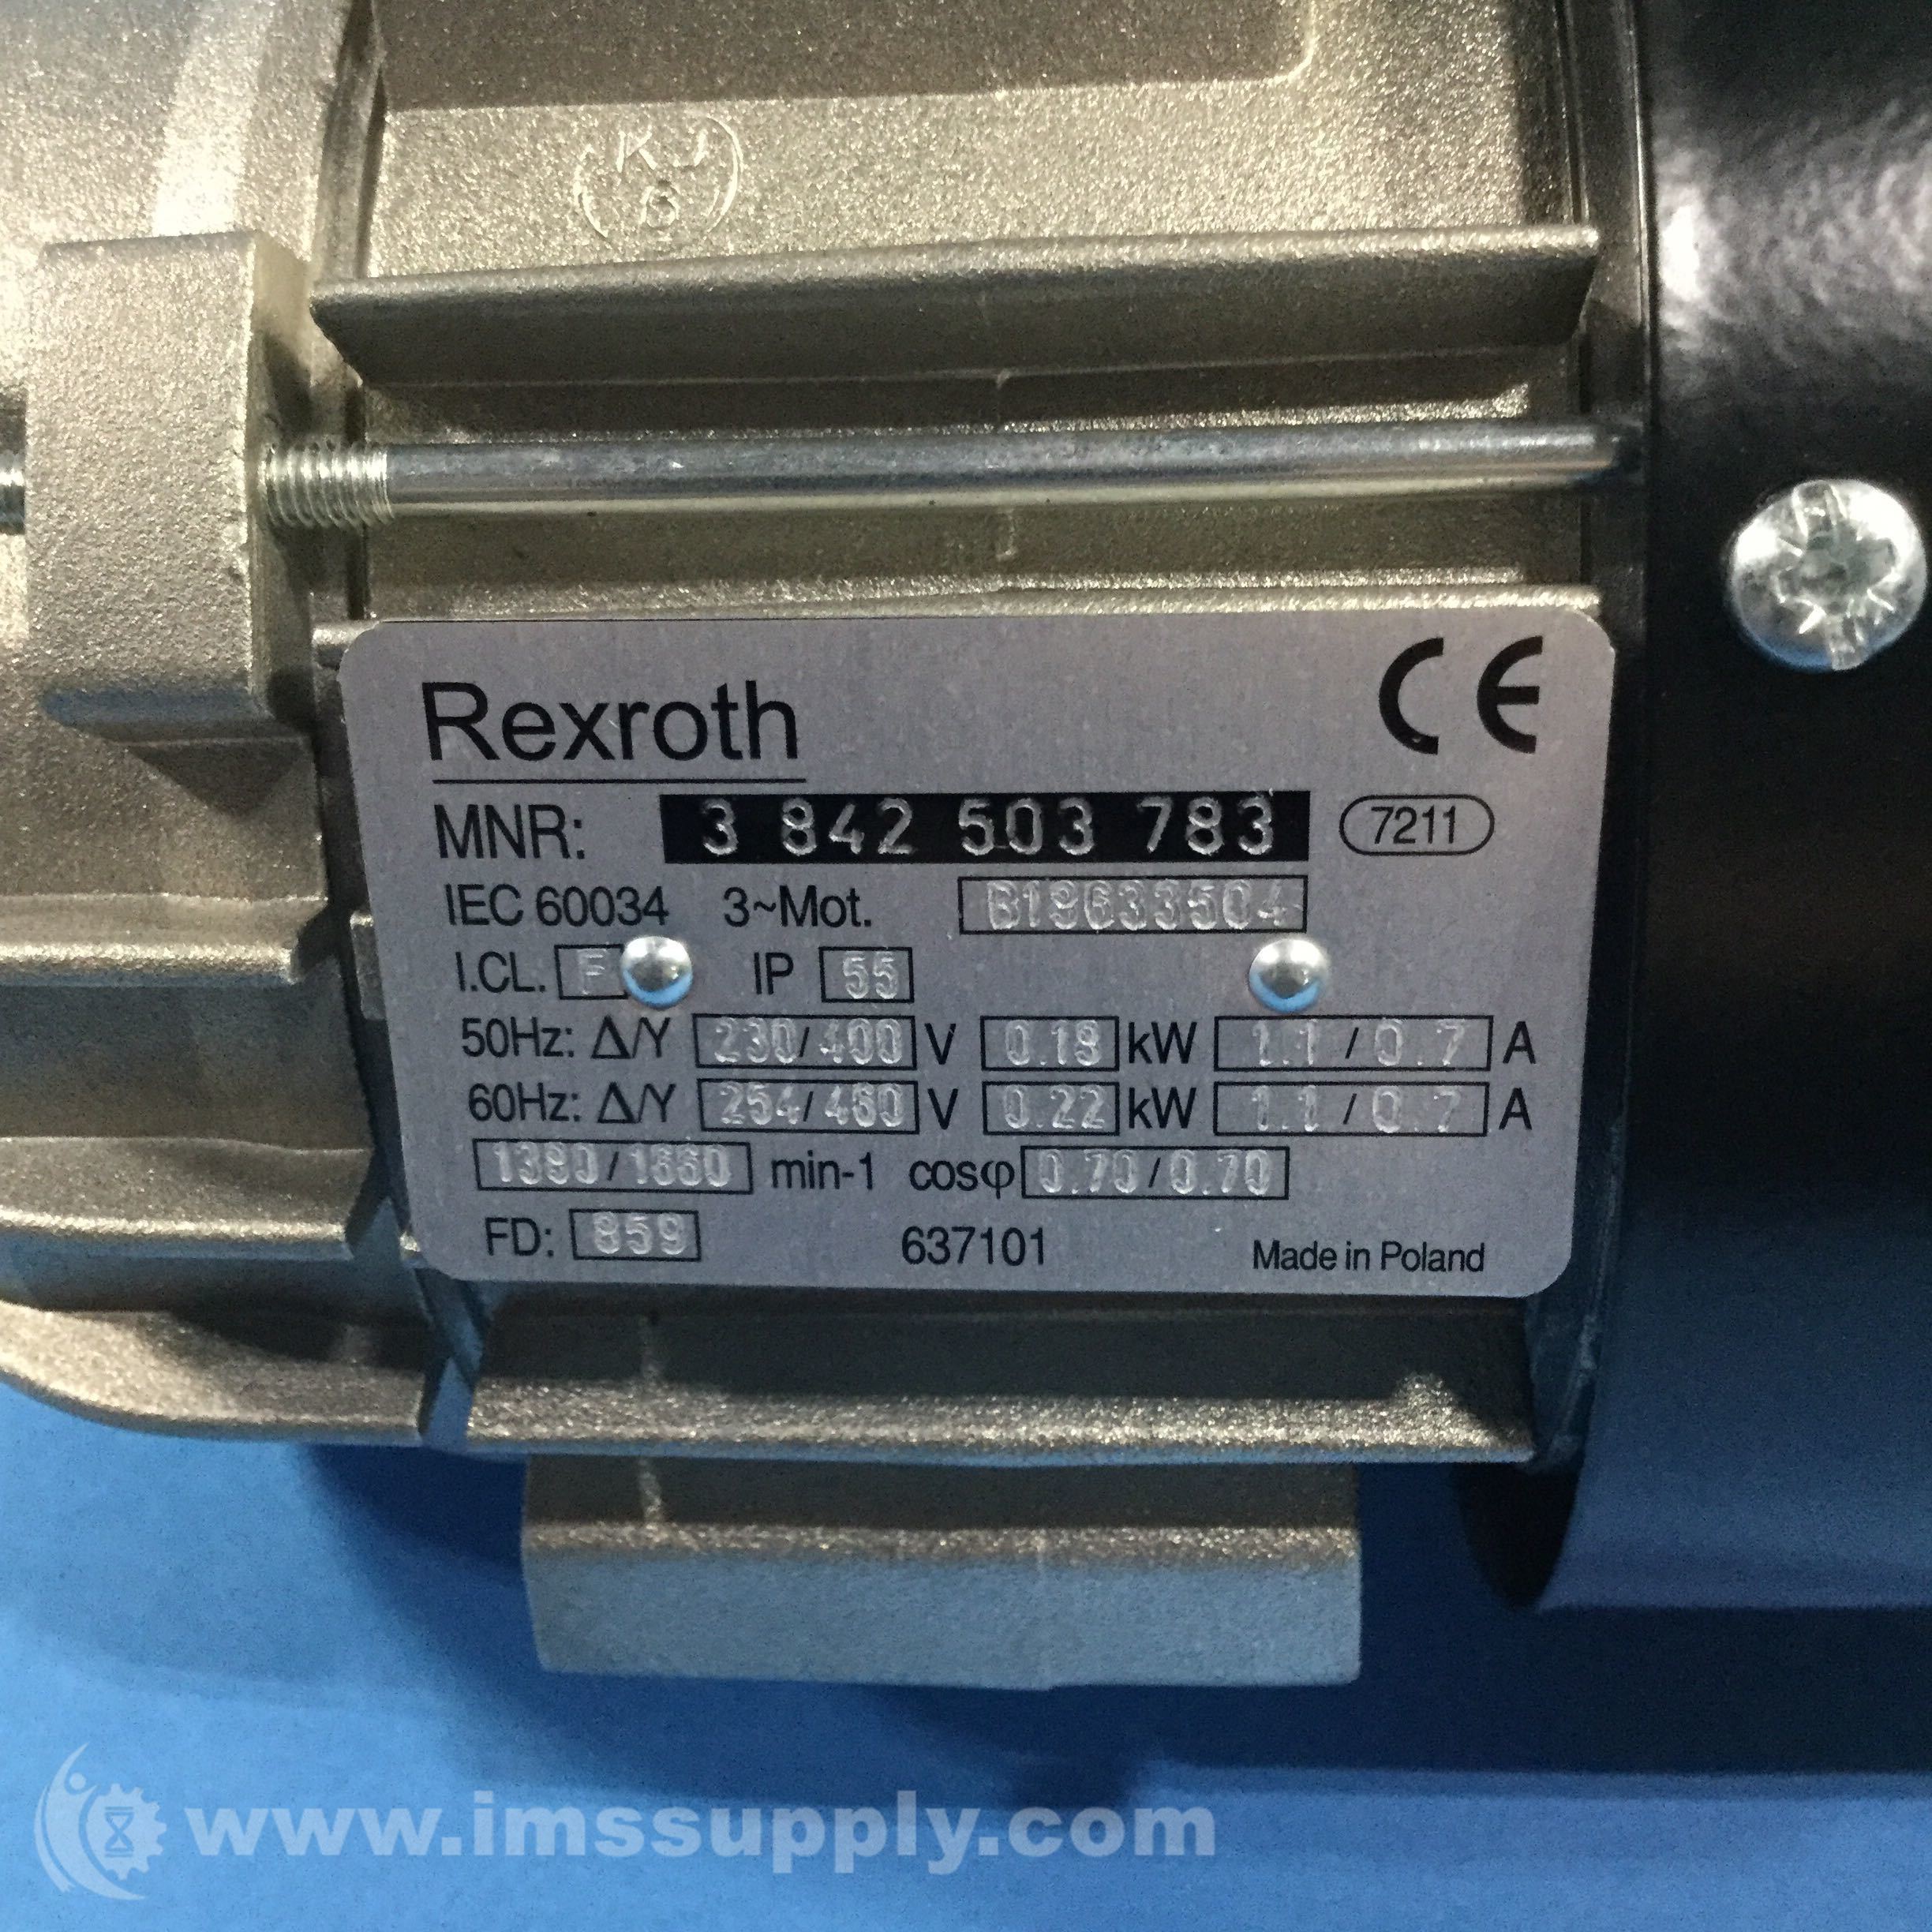 Rexroth 3842503783 Drive Motor, 1.1/.7 Amp, 230/400 VAC, 50-60 HZ 